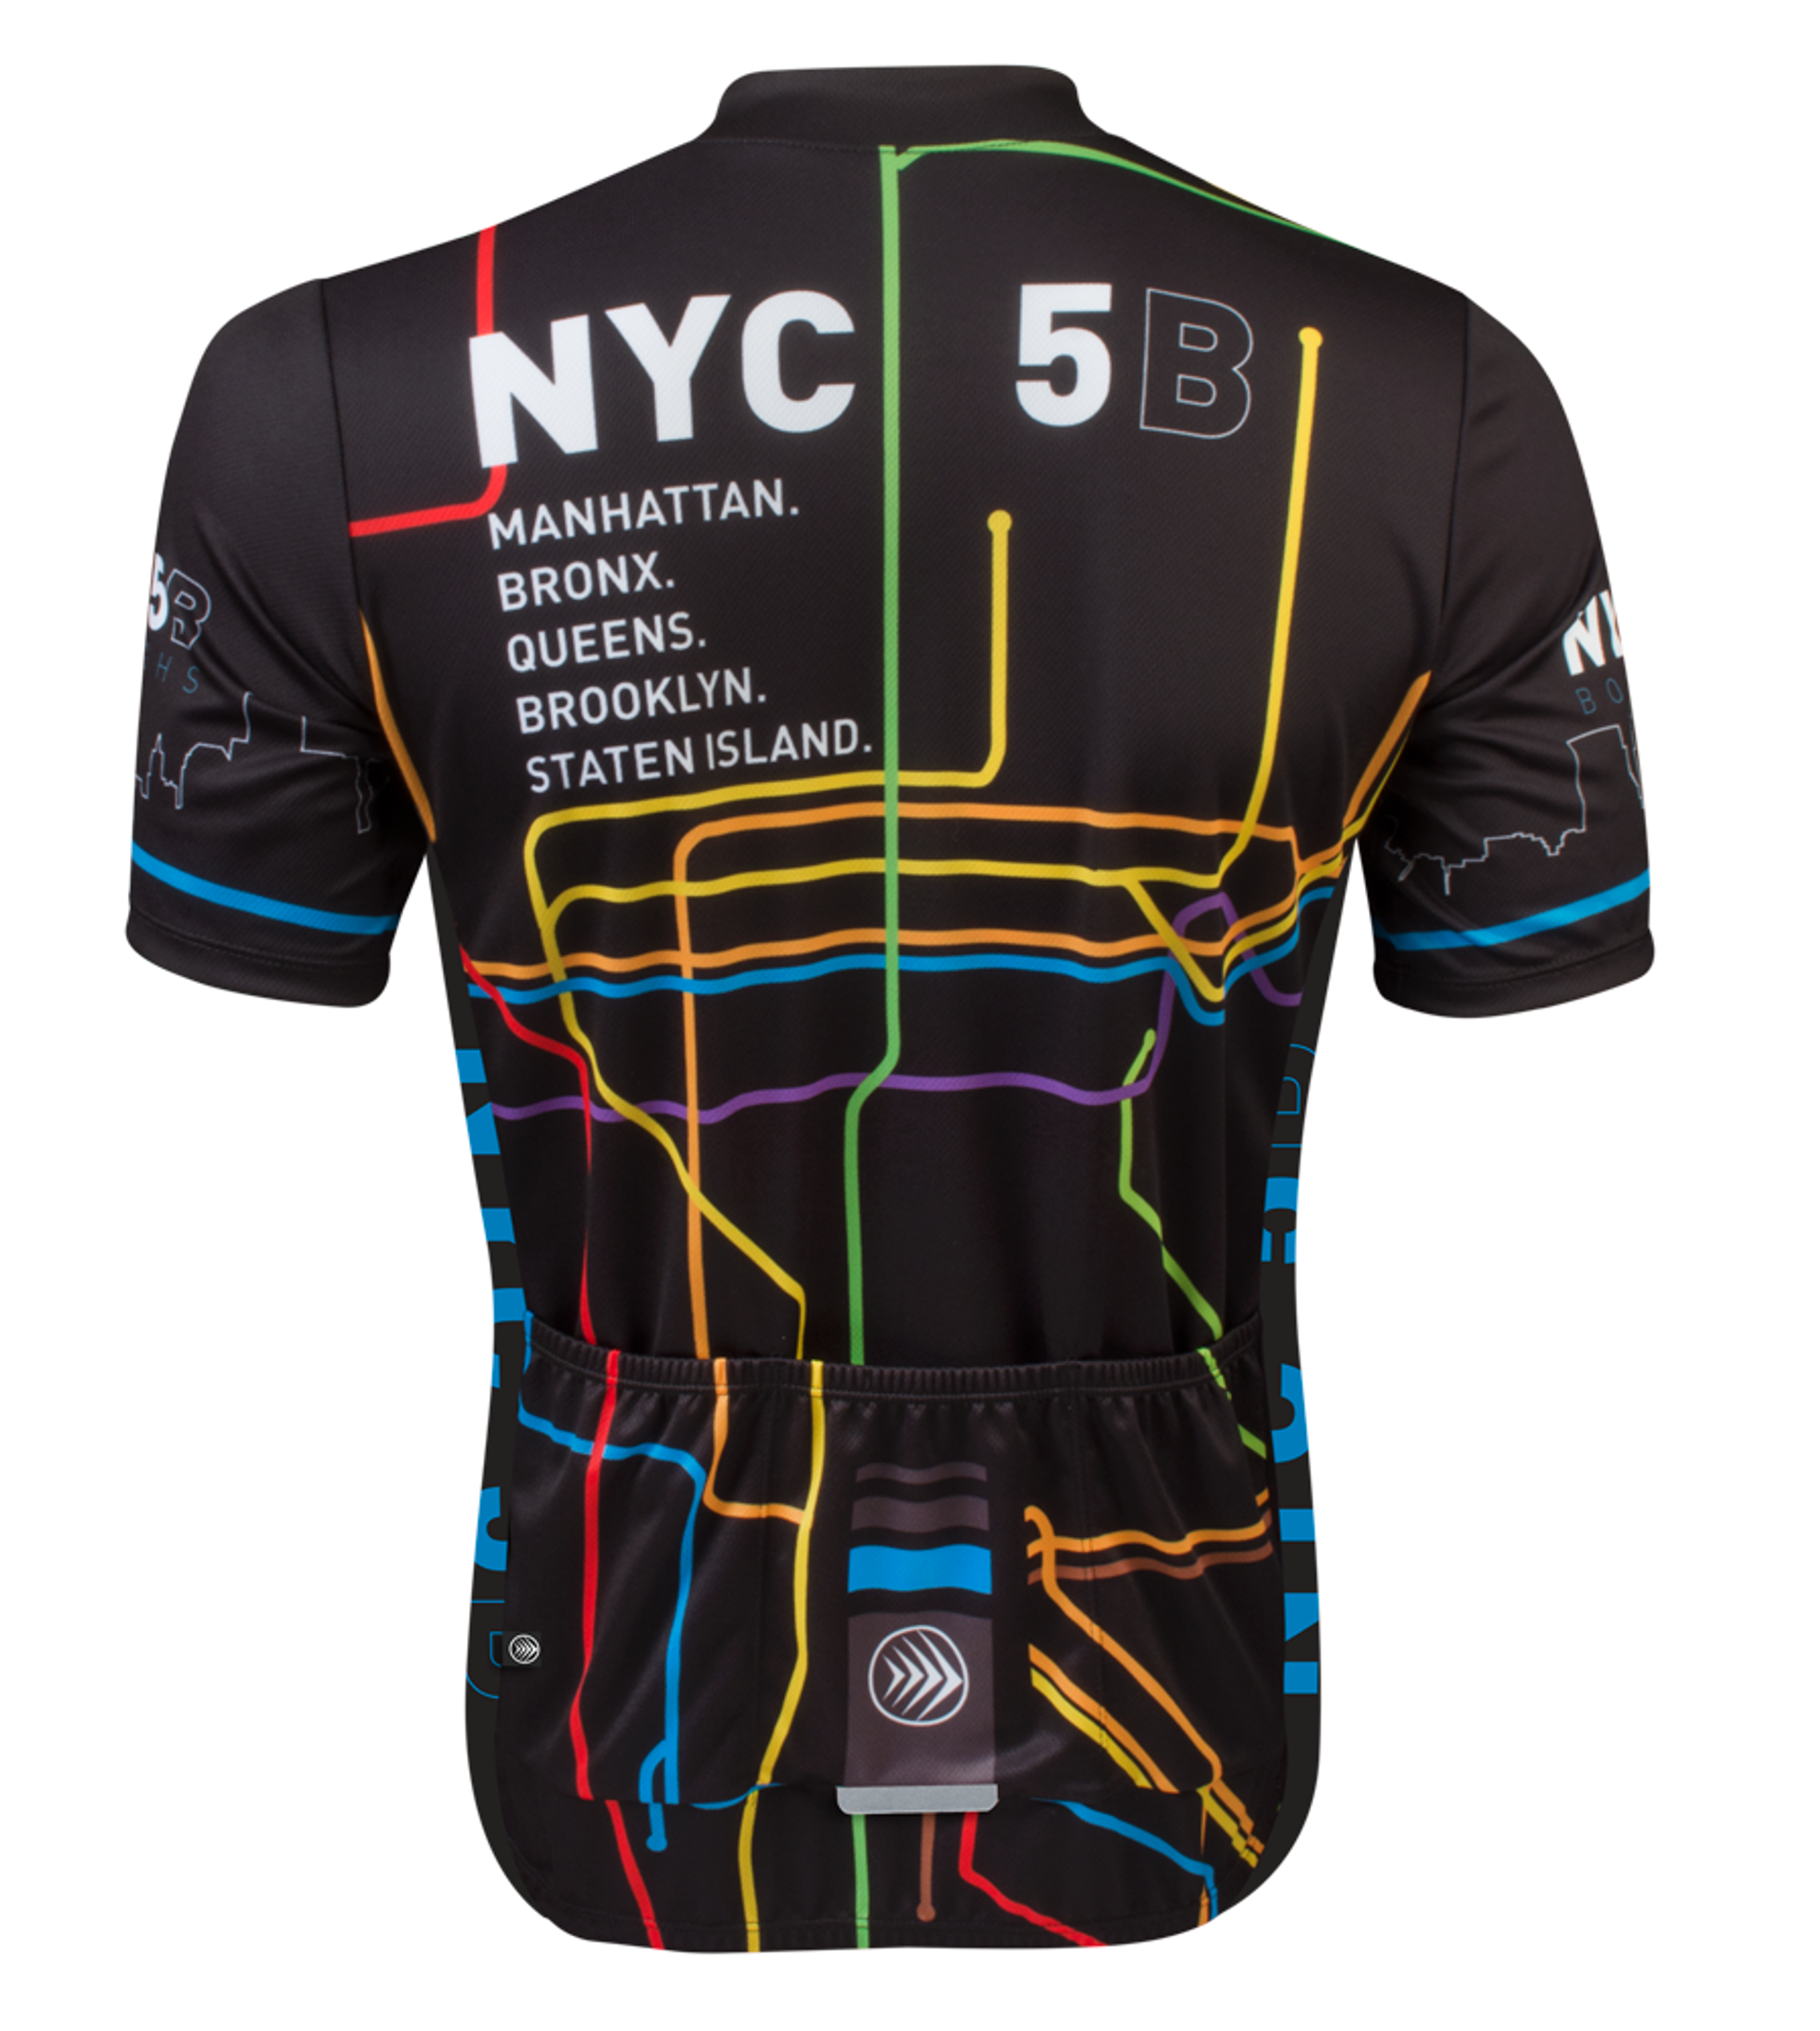 Aero Tech Sprint Jersey - 5 Boro - New York Subway Theme Cycling Jersey